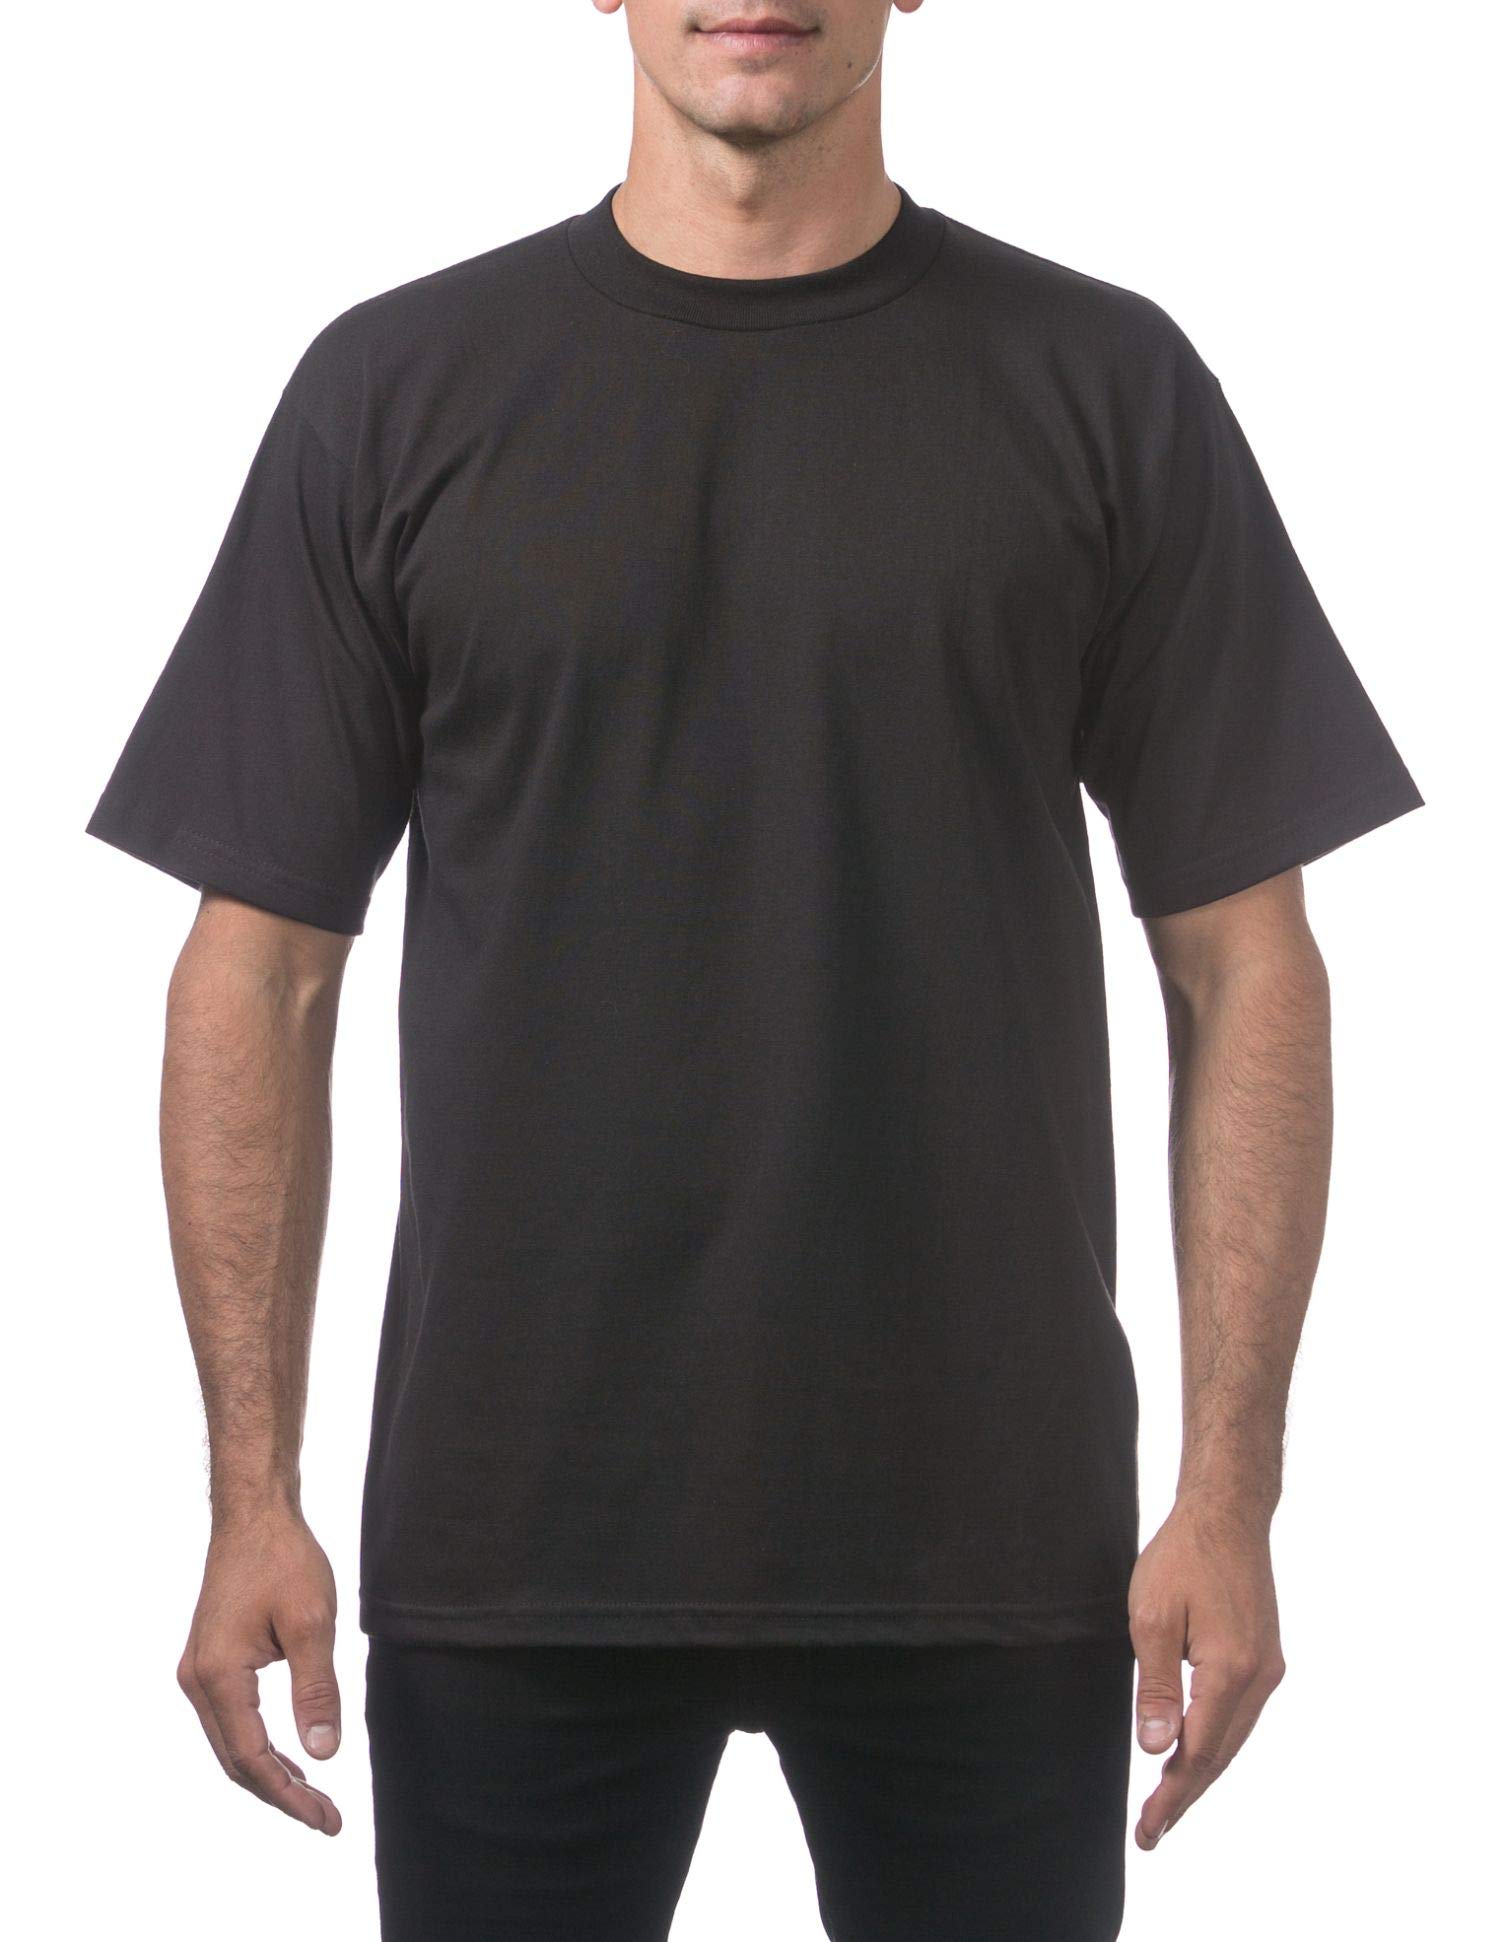 Pro Club Men's 12-Pack Heavyweight Cotton Short Sleeve Crew Neck T-Shirt, Black, 4X-Large